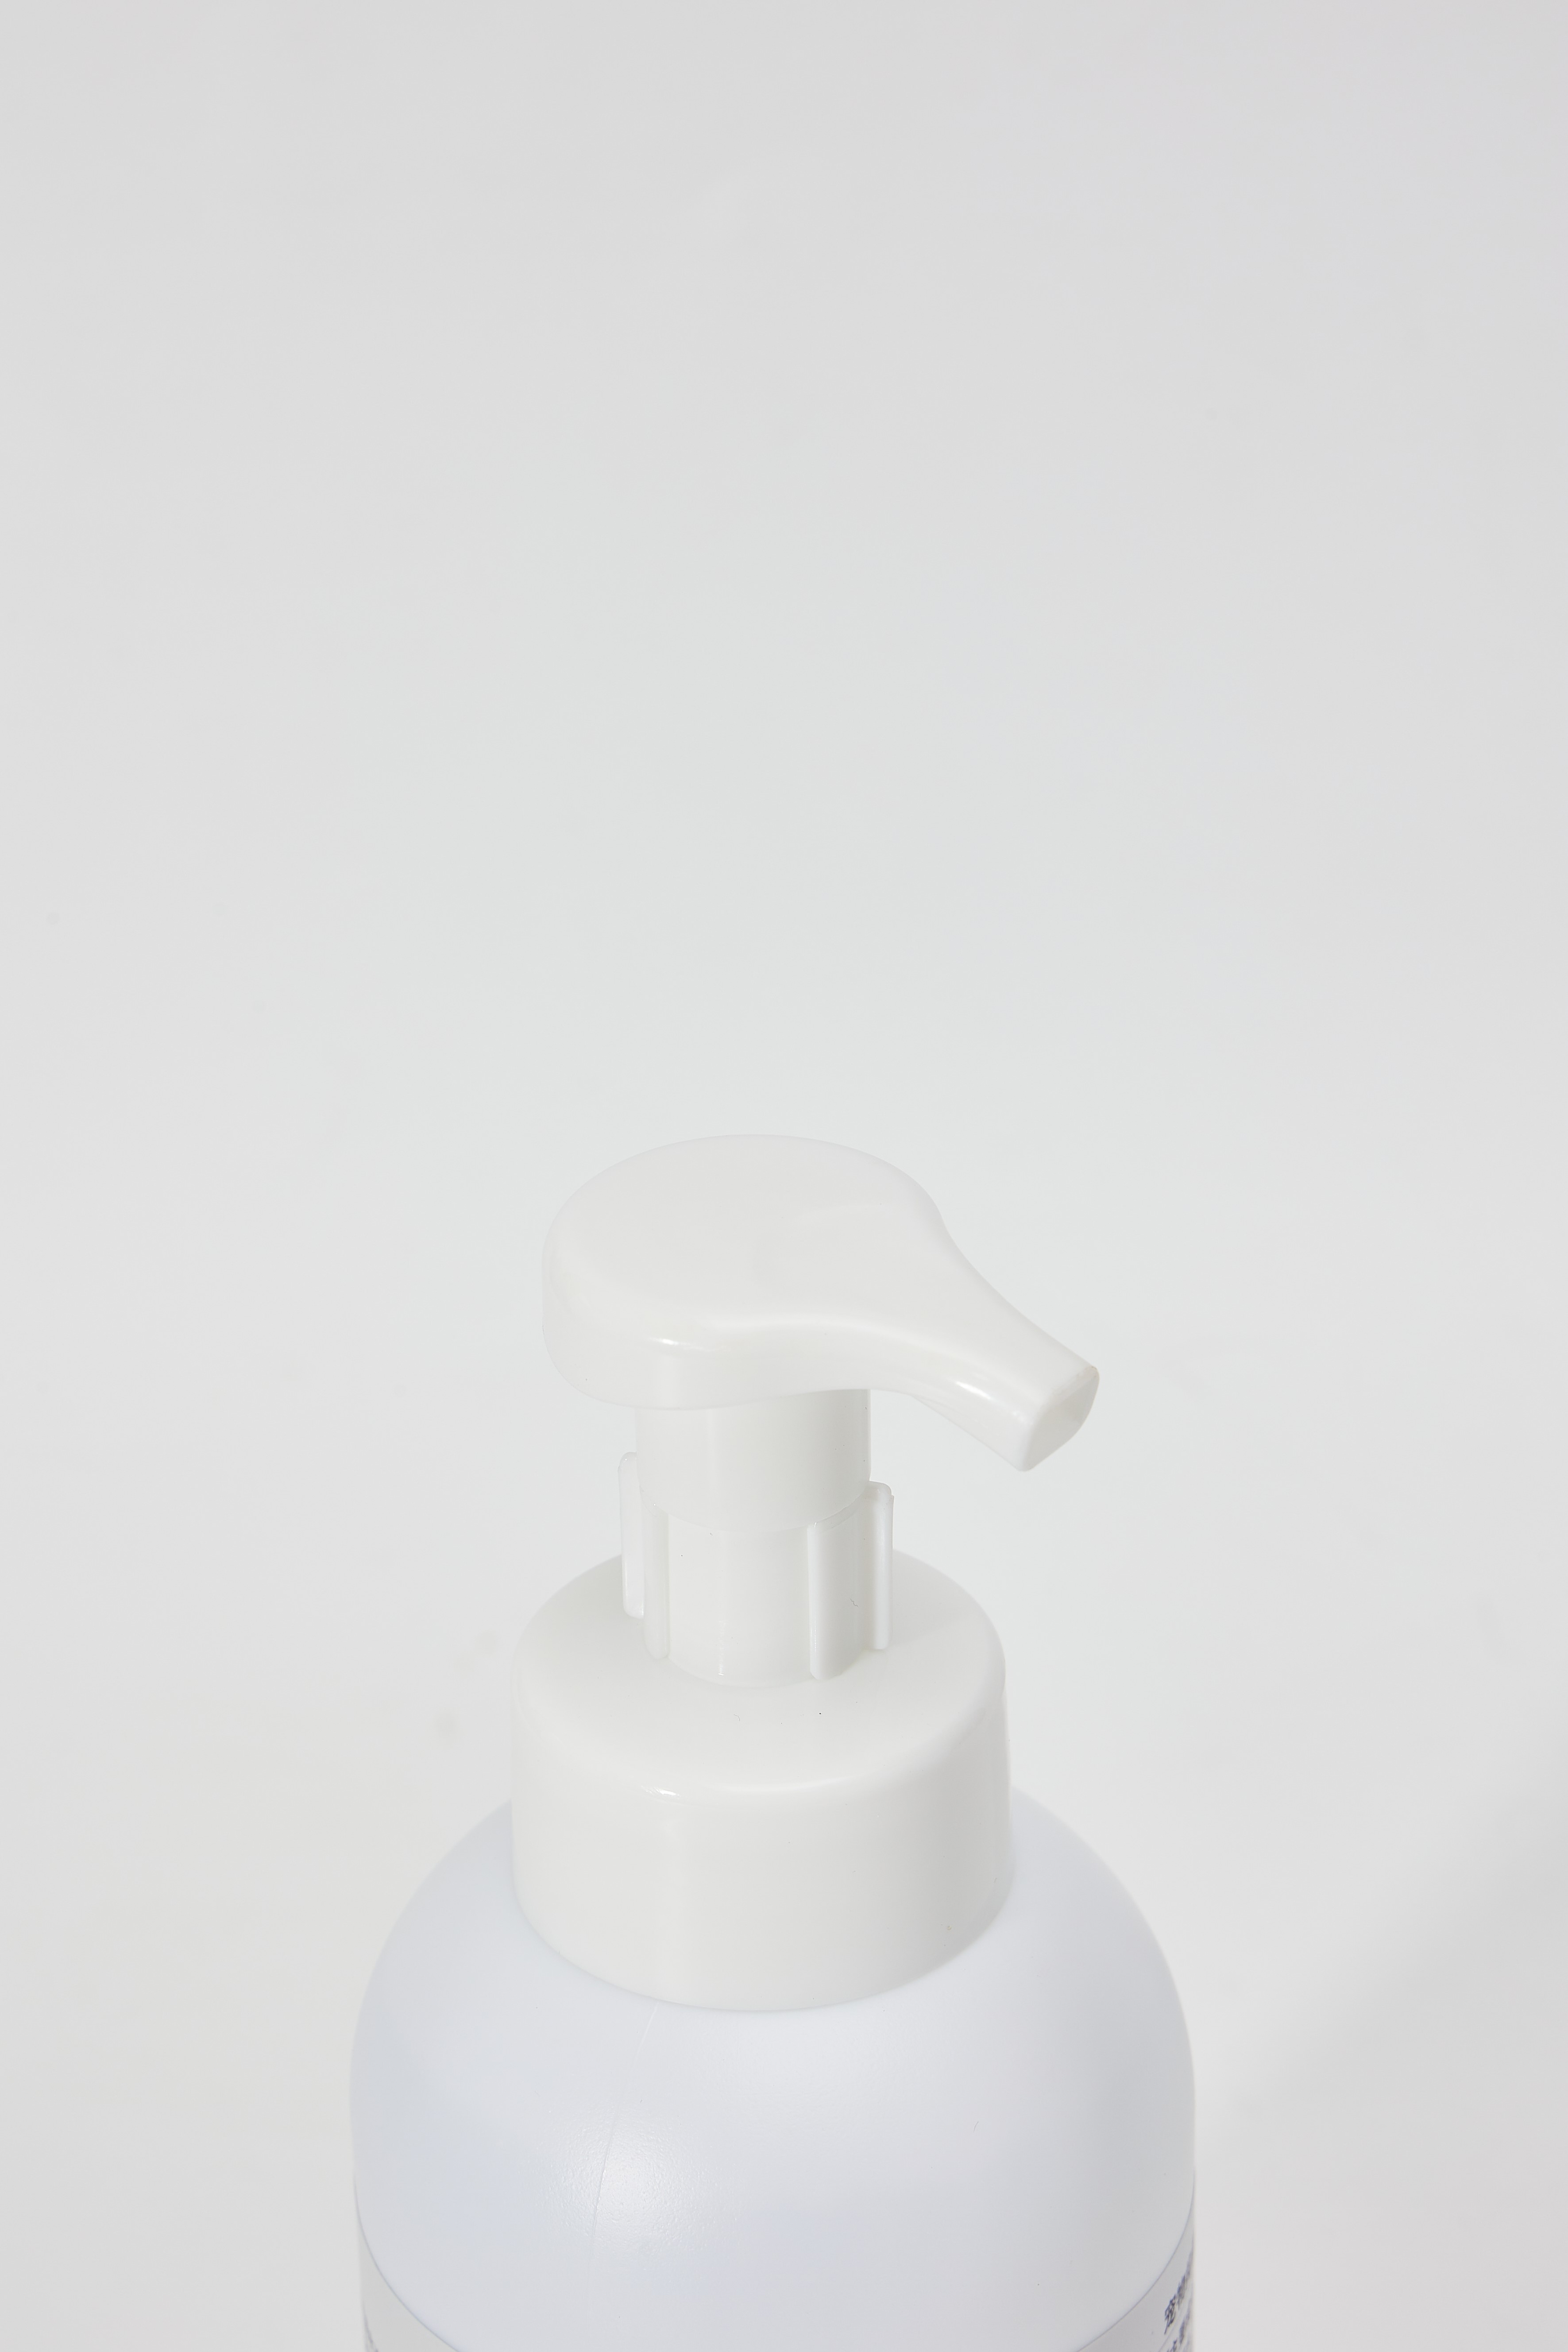 Pet antibacterial fragrance retaining shampoo (foam) 520ml